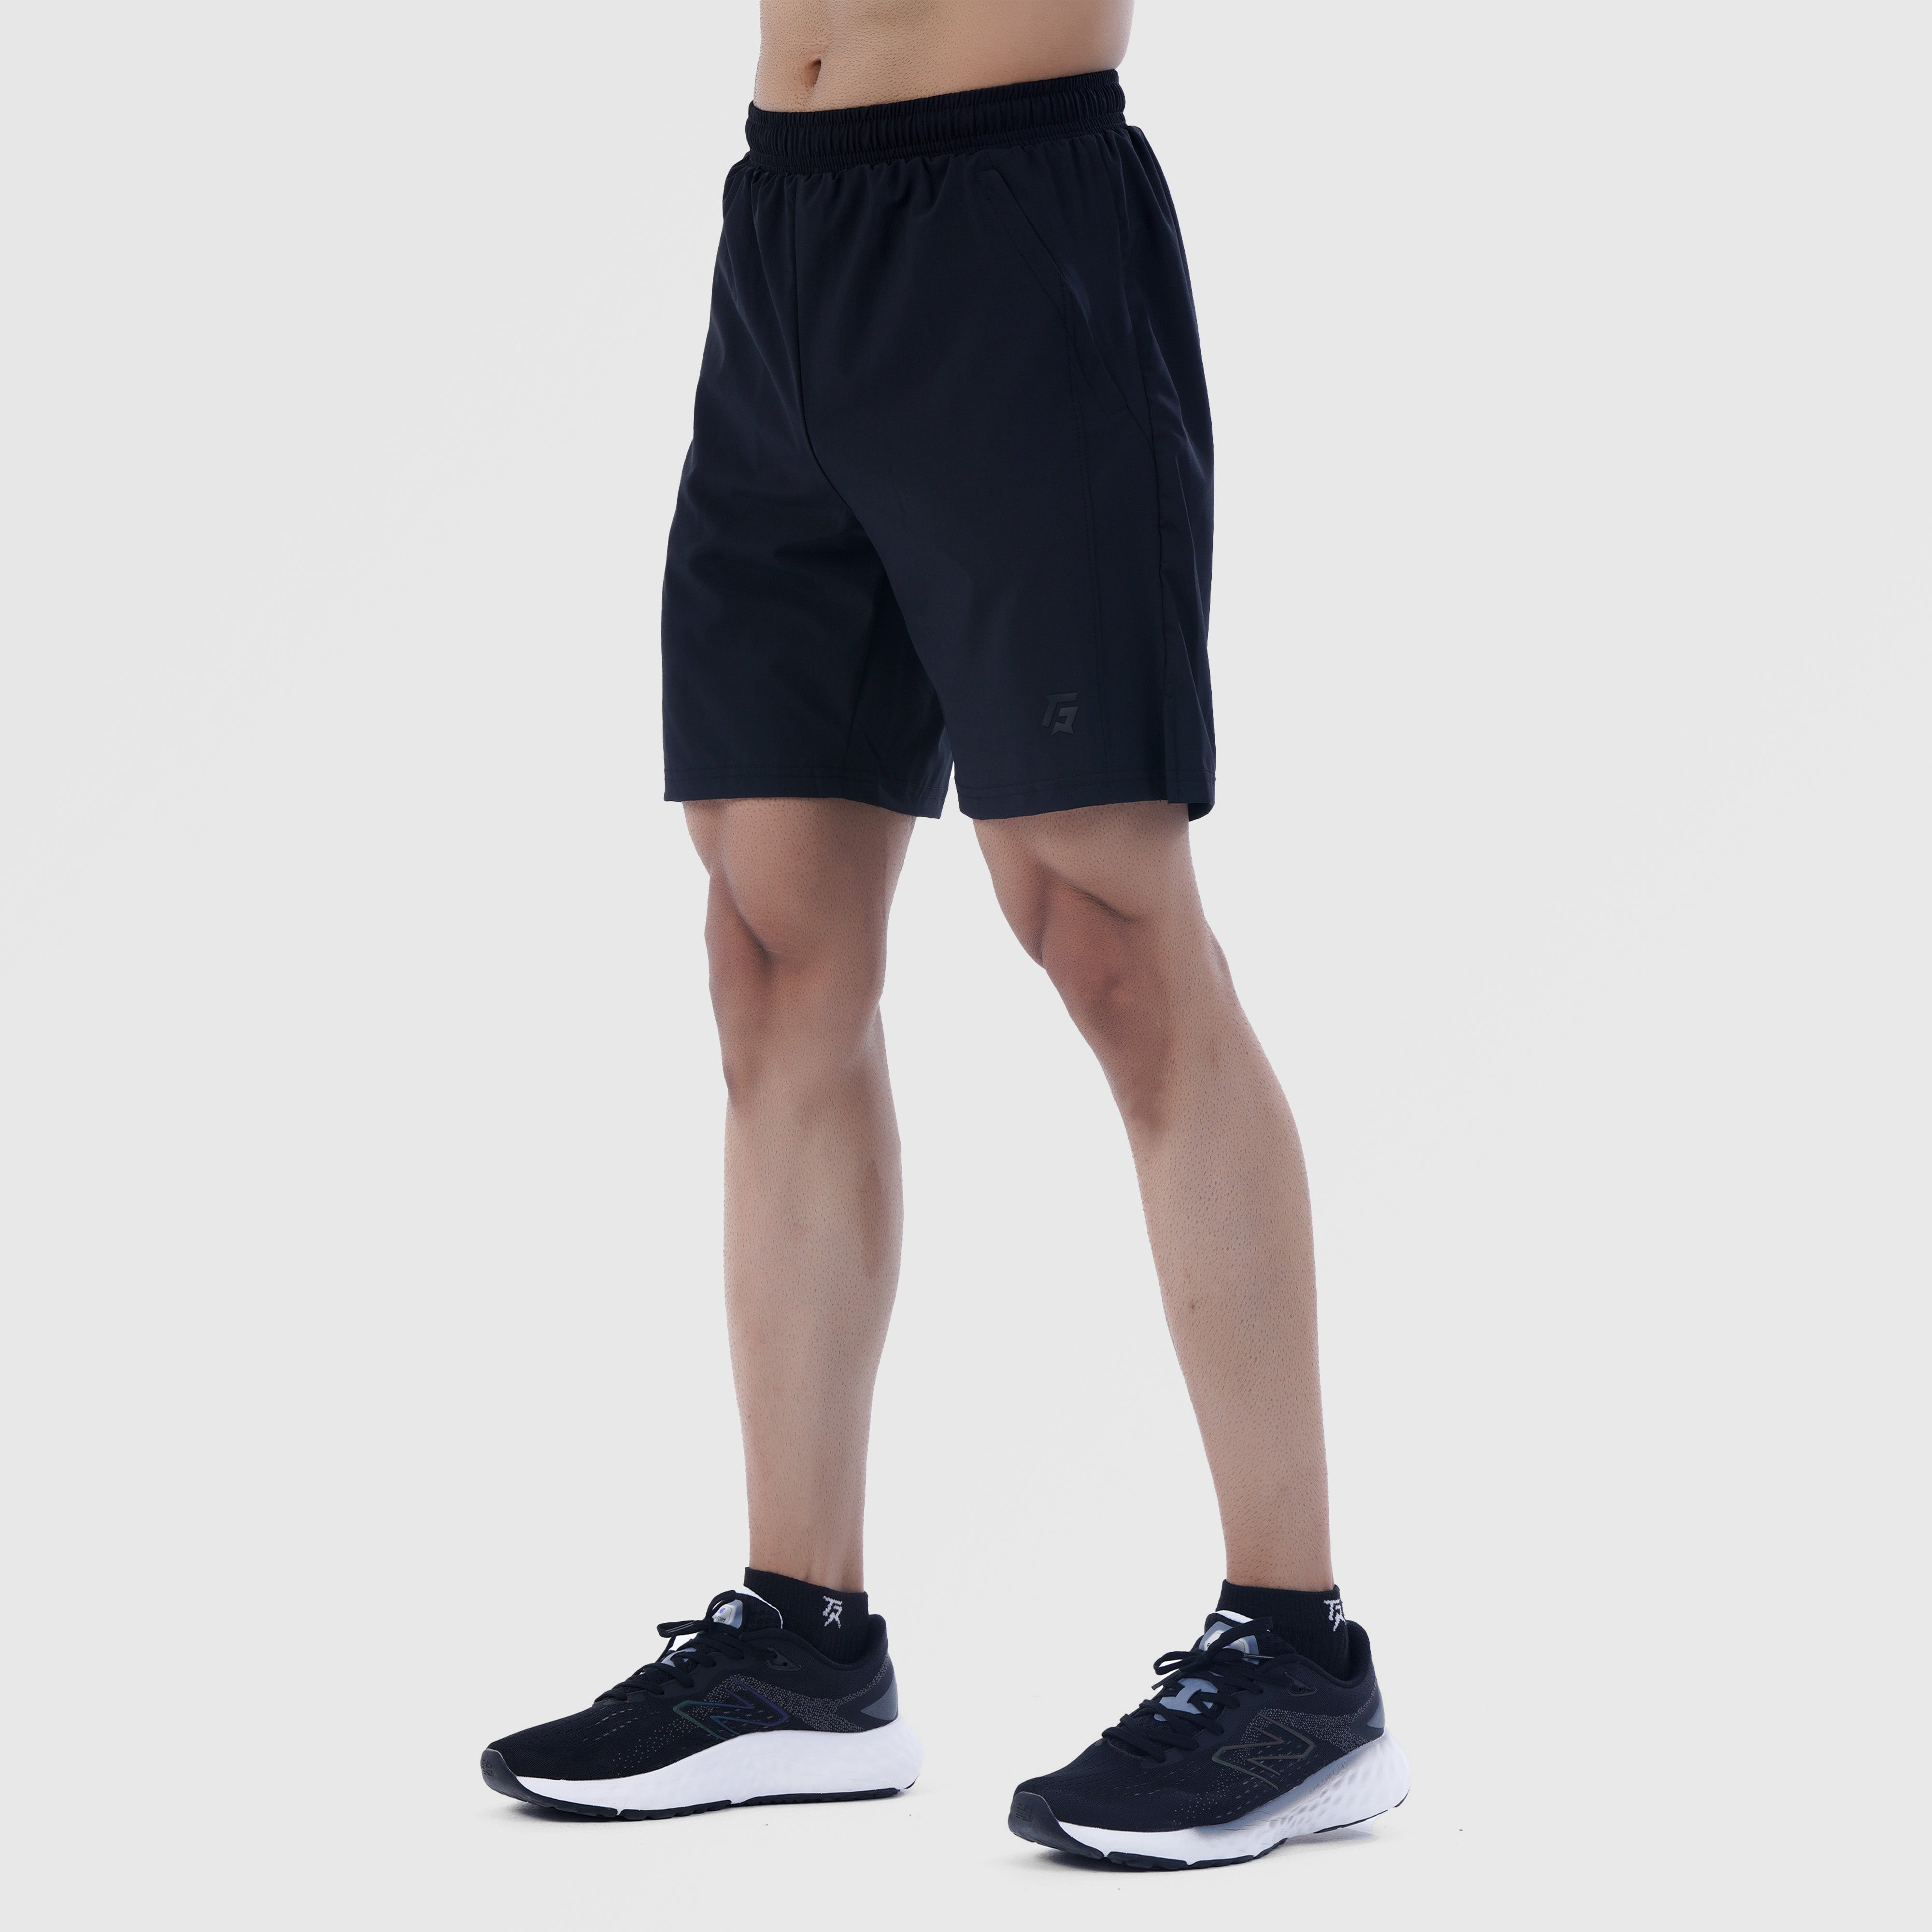 ProVent Shorts (Black)